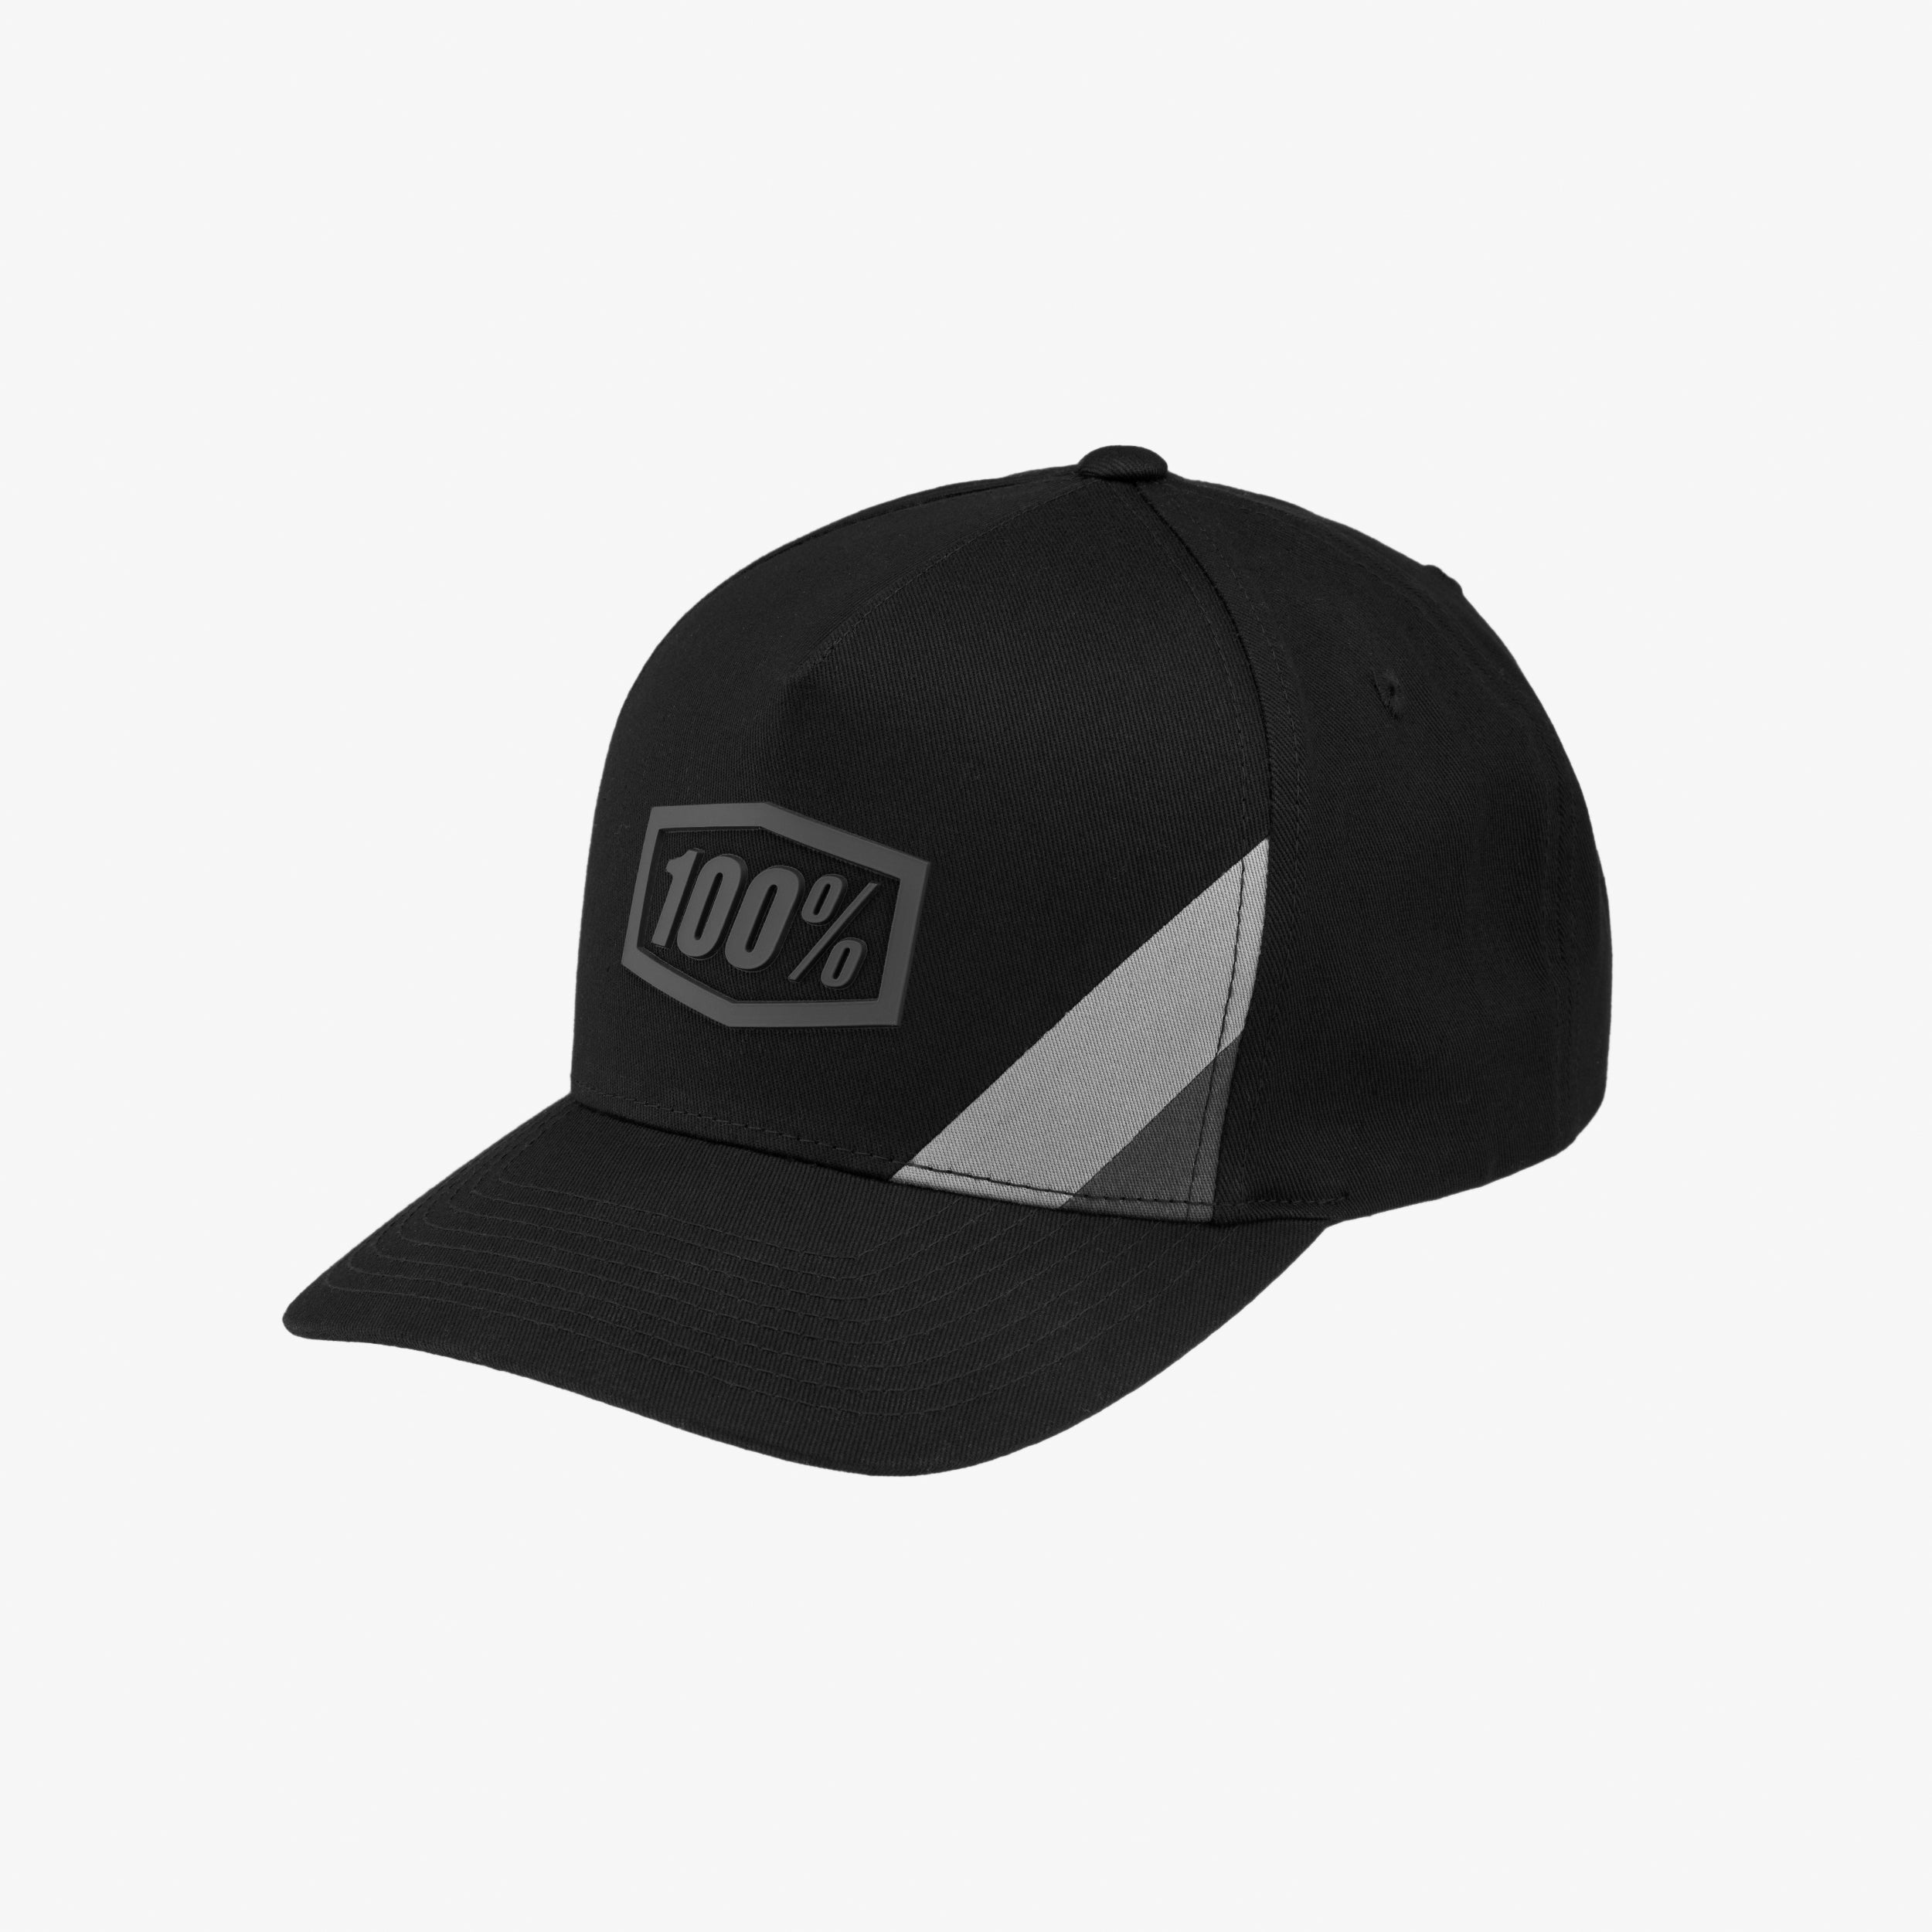 CORNERSTONE X-Fit Snapback Hat Black/Grey